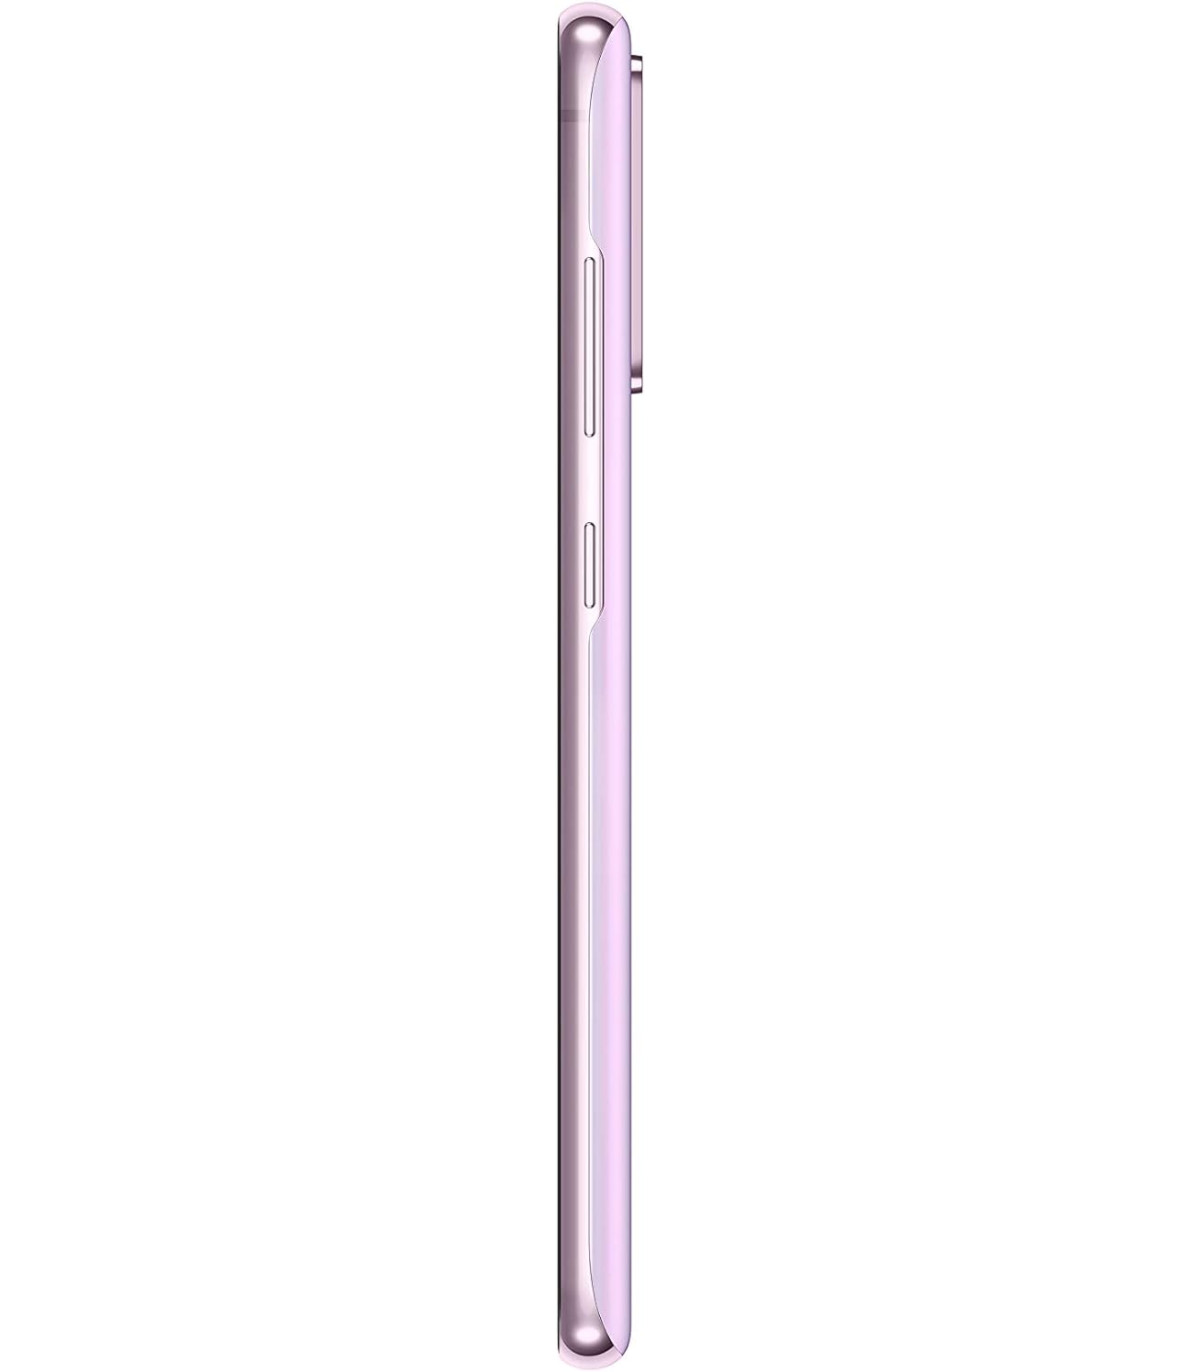 Samsung Galaxy S20 FE Dual Sim Blanc 128Go Reconditionné